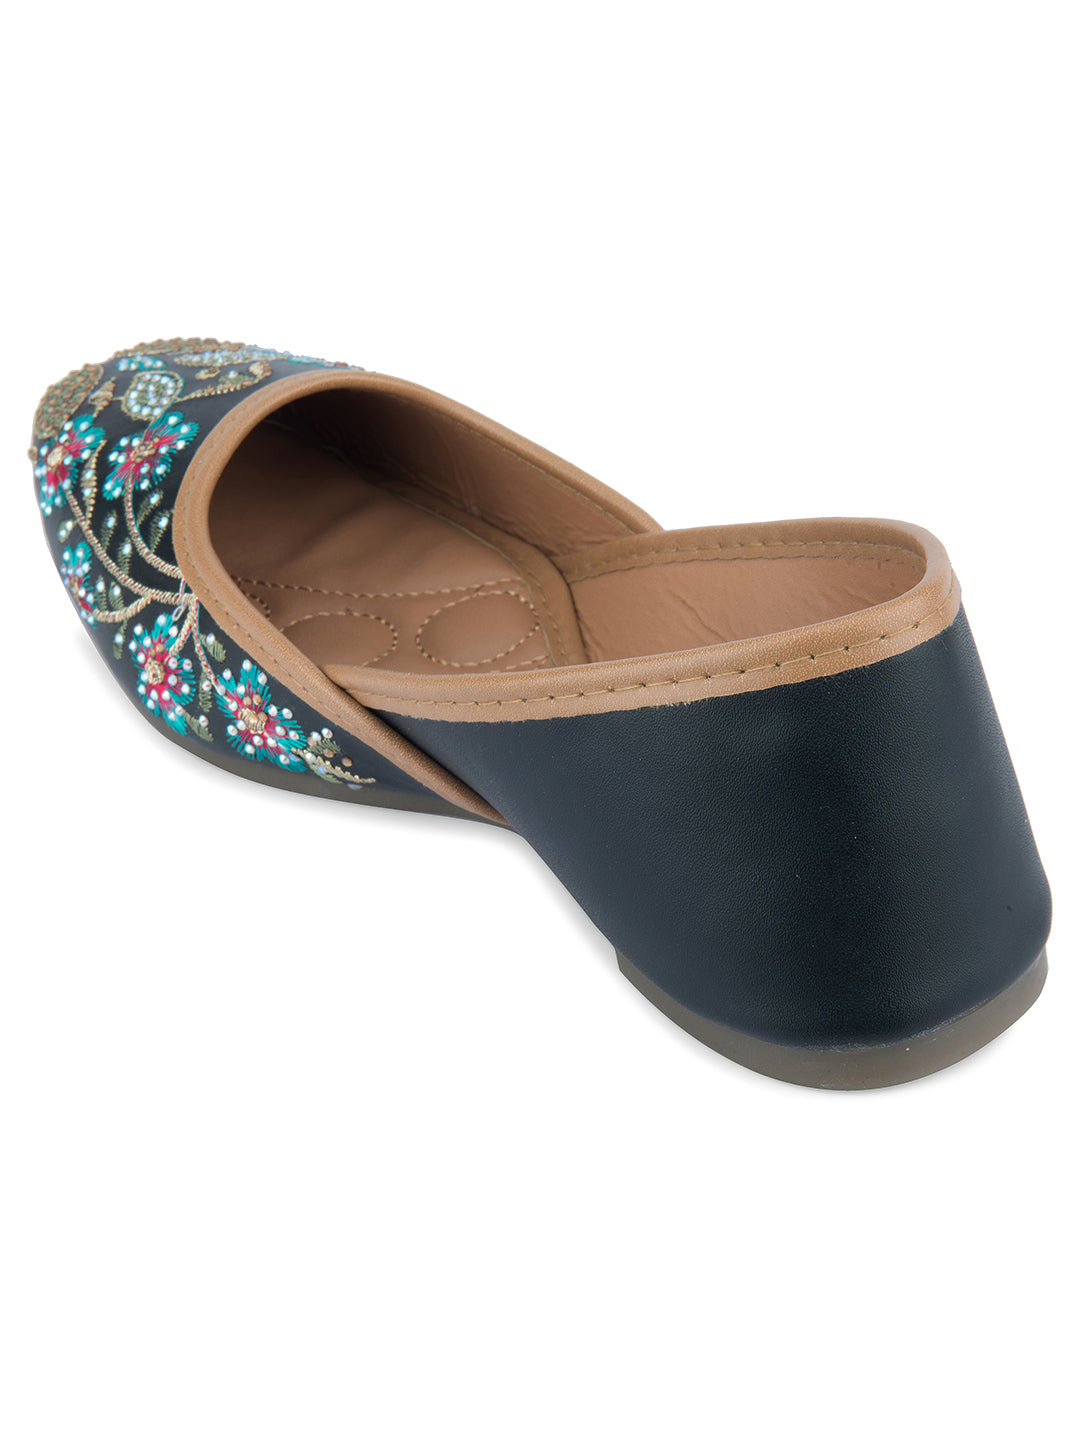 Women's Black Handcrafted Stone Work  Indian Ethnic Comfort Footwear - Desi Colour